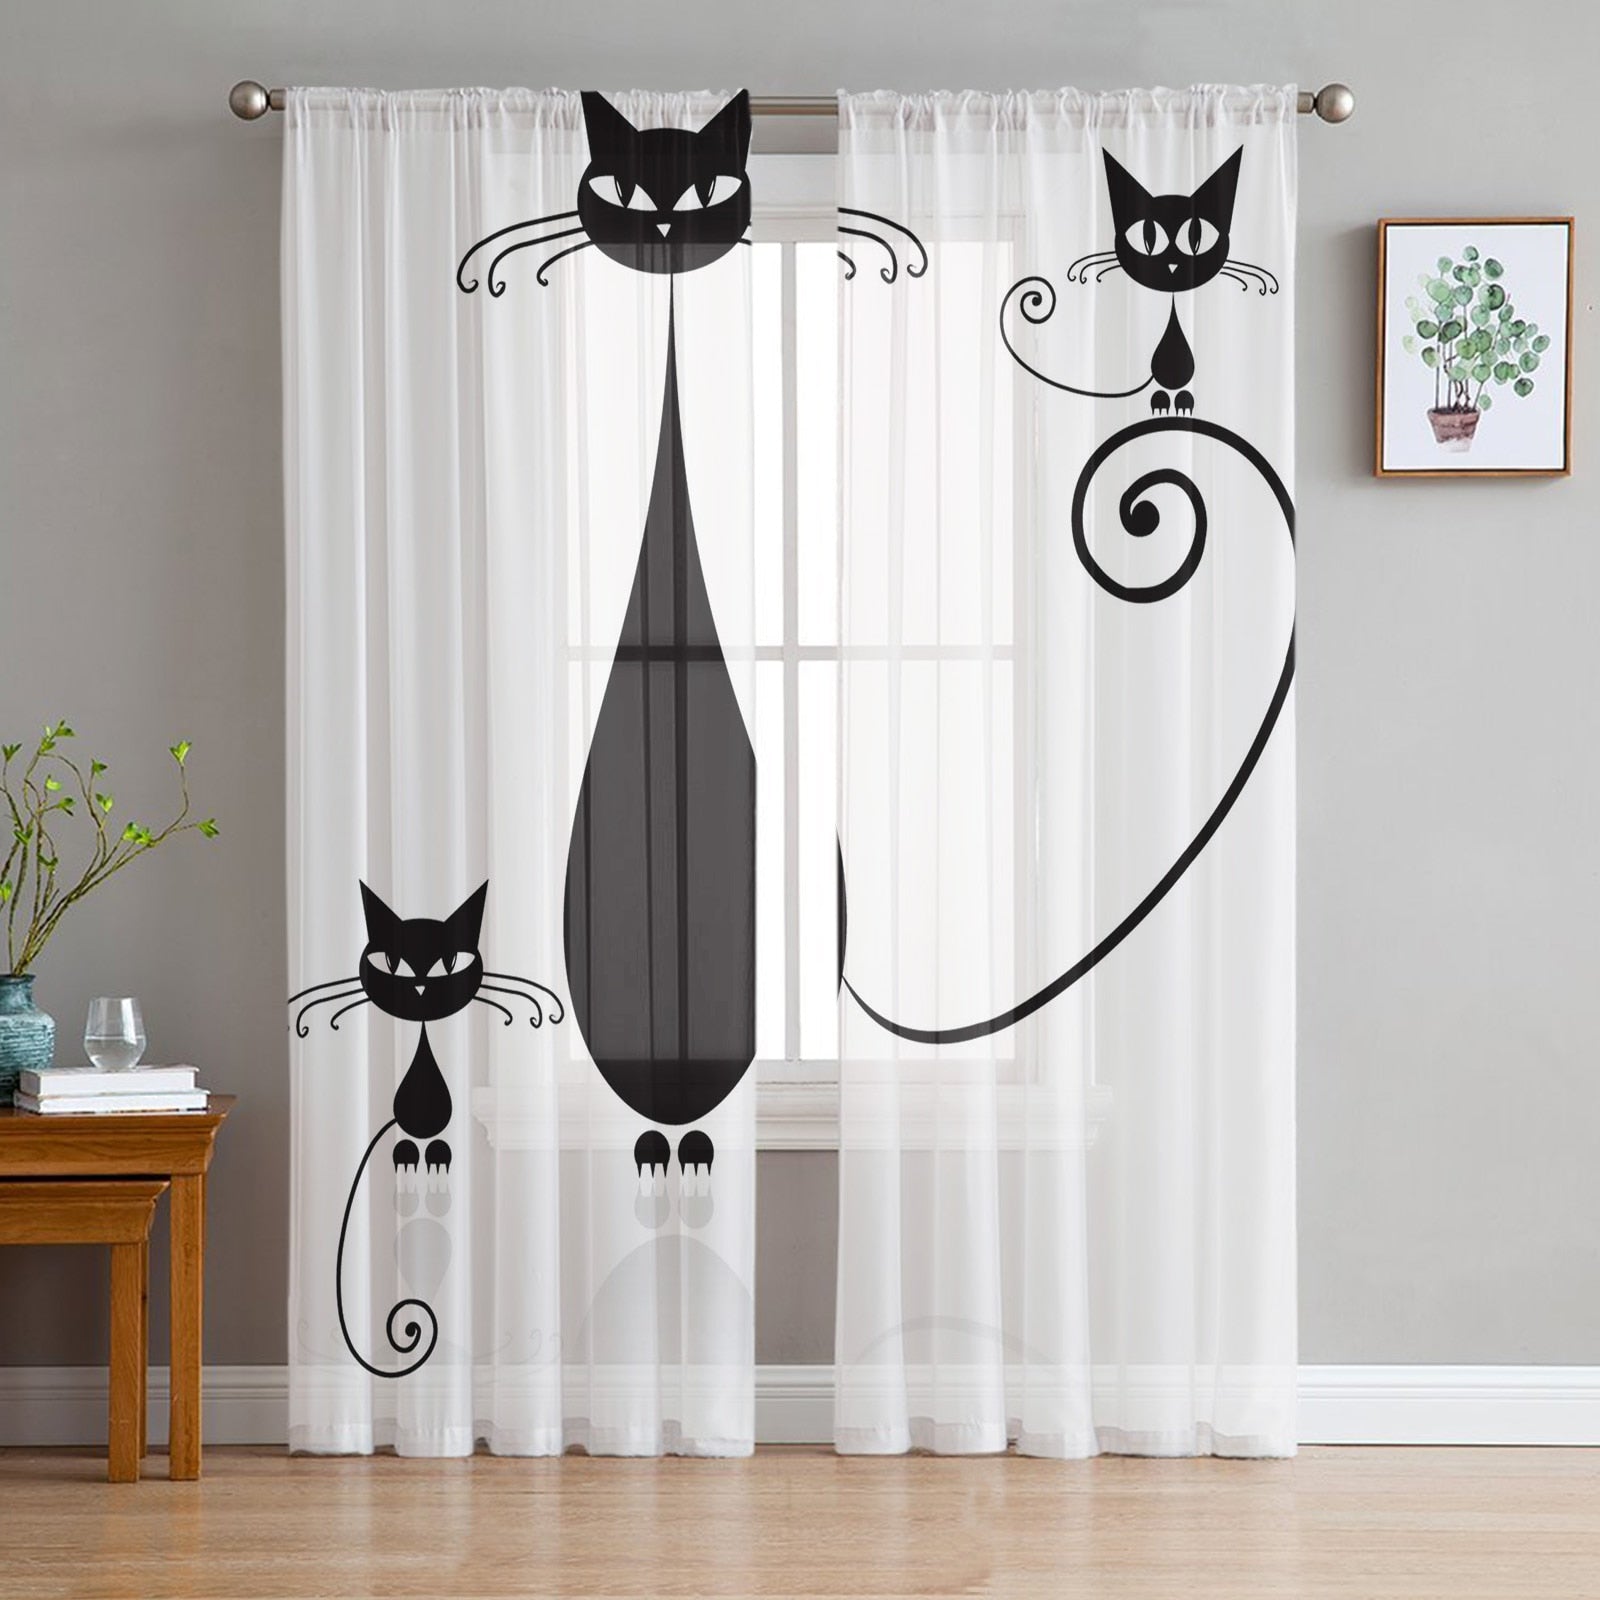 Pete the Cat Curtains - W135 x H114cm - cat curtains